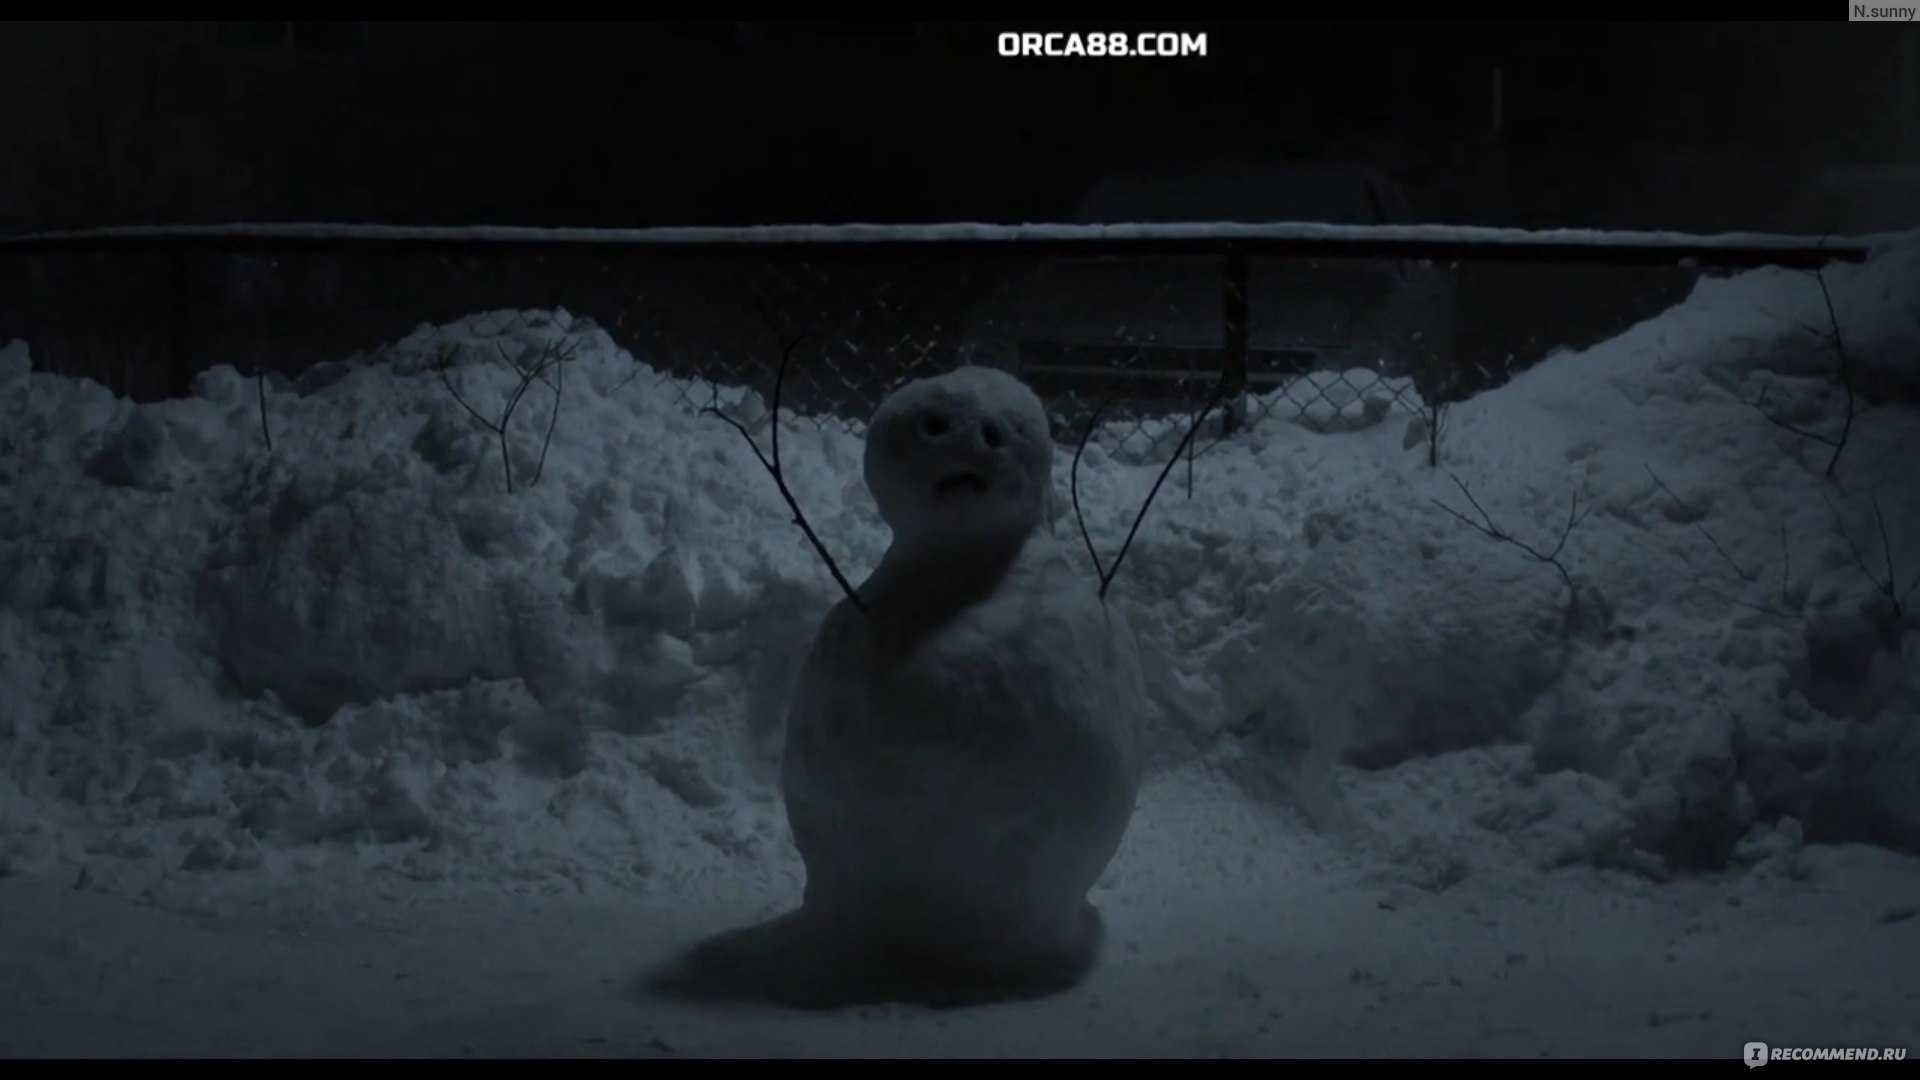 Снеговик (фильм 2017 года) - the snowman (2017 film) - wikipedia